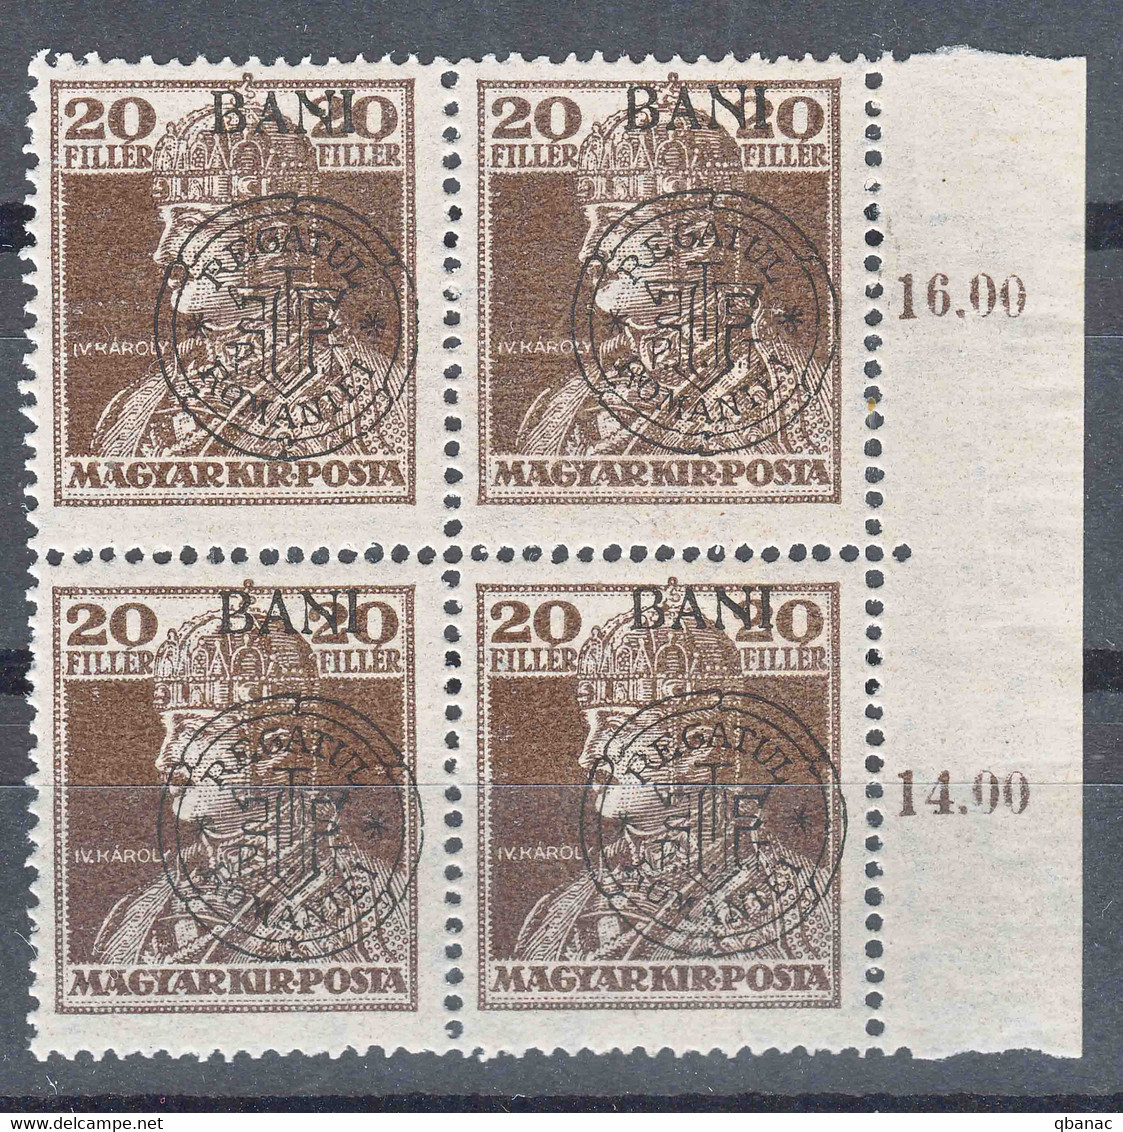 Romania Overprint On Hungary Stamps Occupation Transylvania 1919 Mi#47 I Mint Never Hinged Pc. Of Four - Transylvania